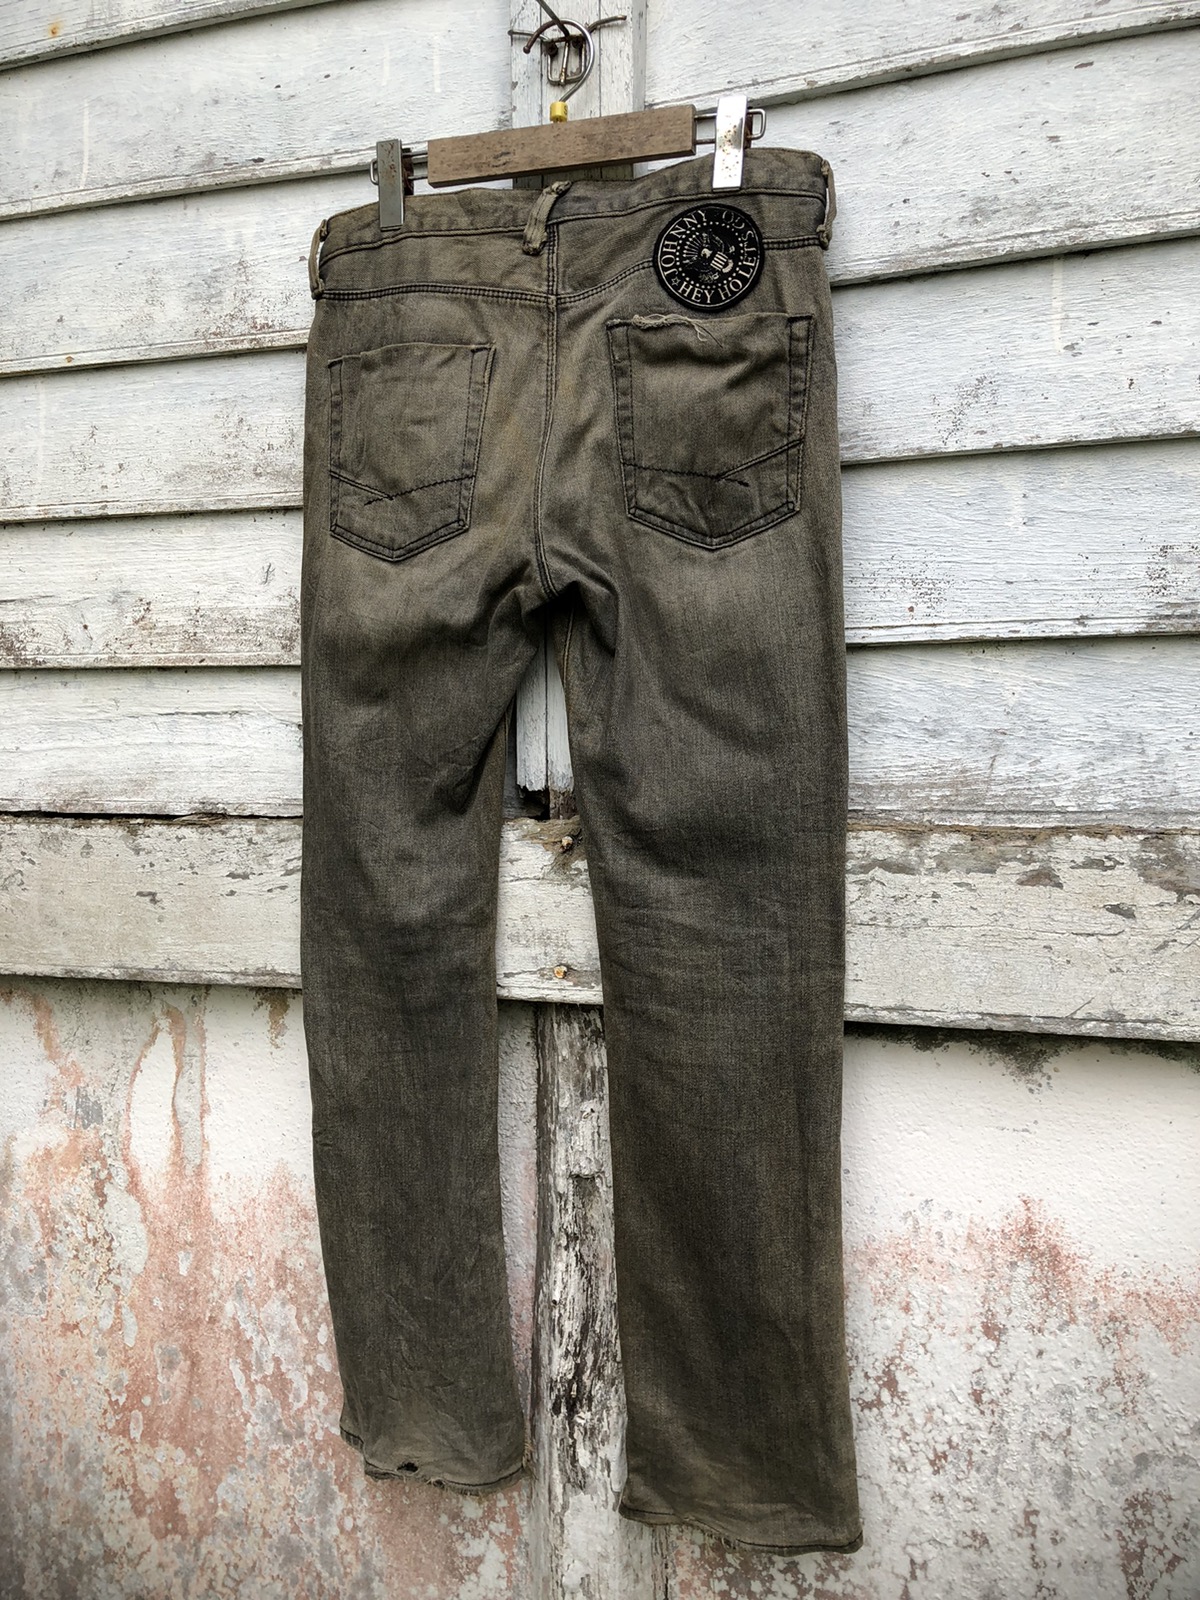 Vans Joey Ramone Black Rusty Washed Distressed Denim Pant - 4